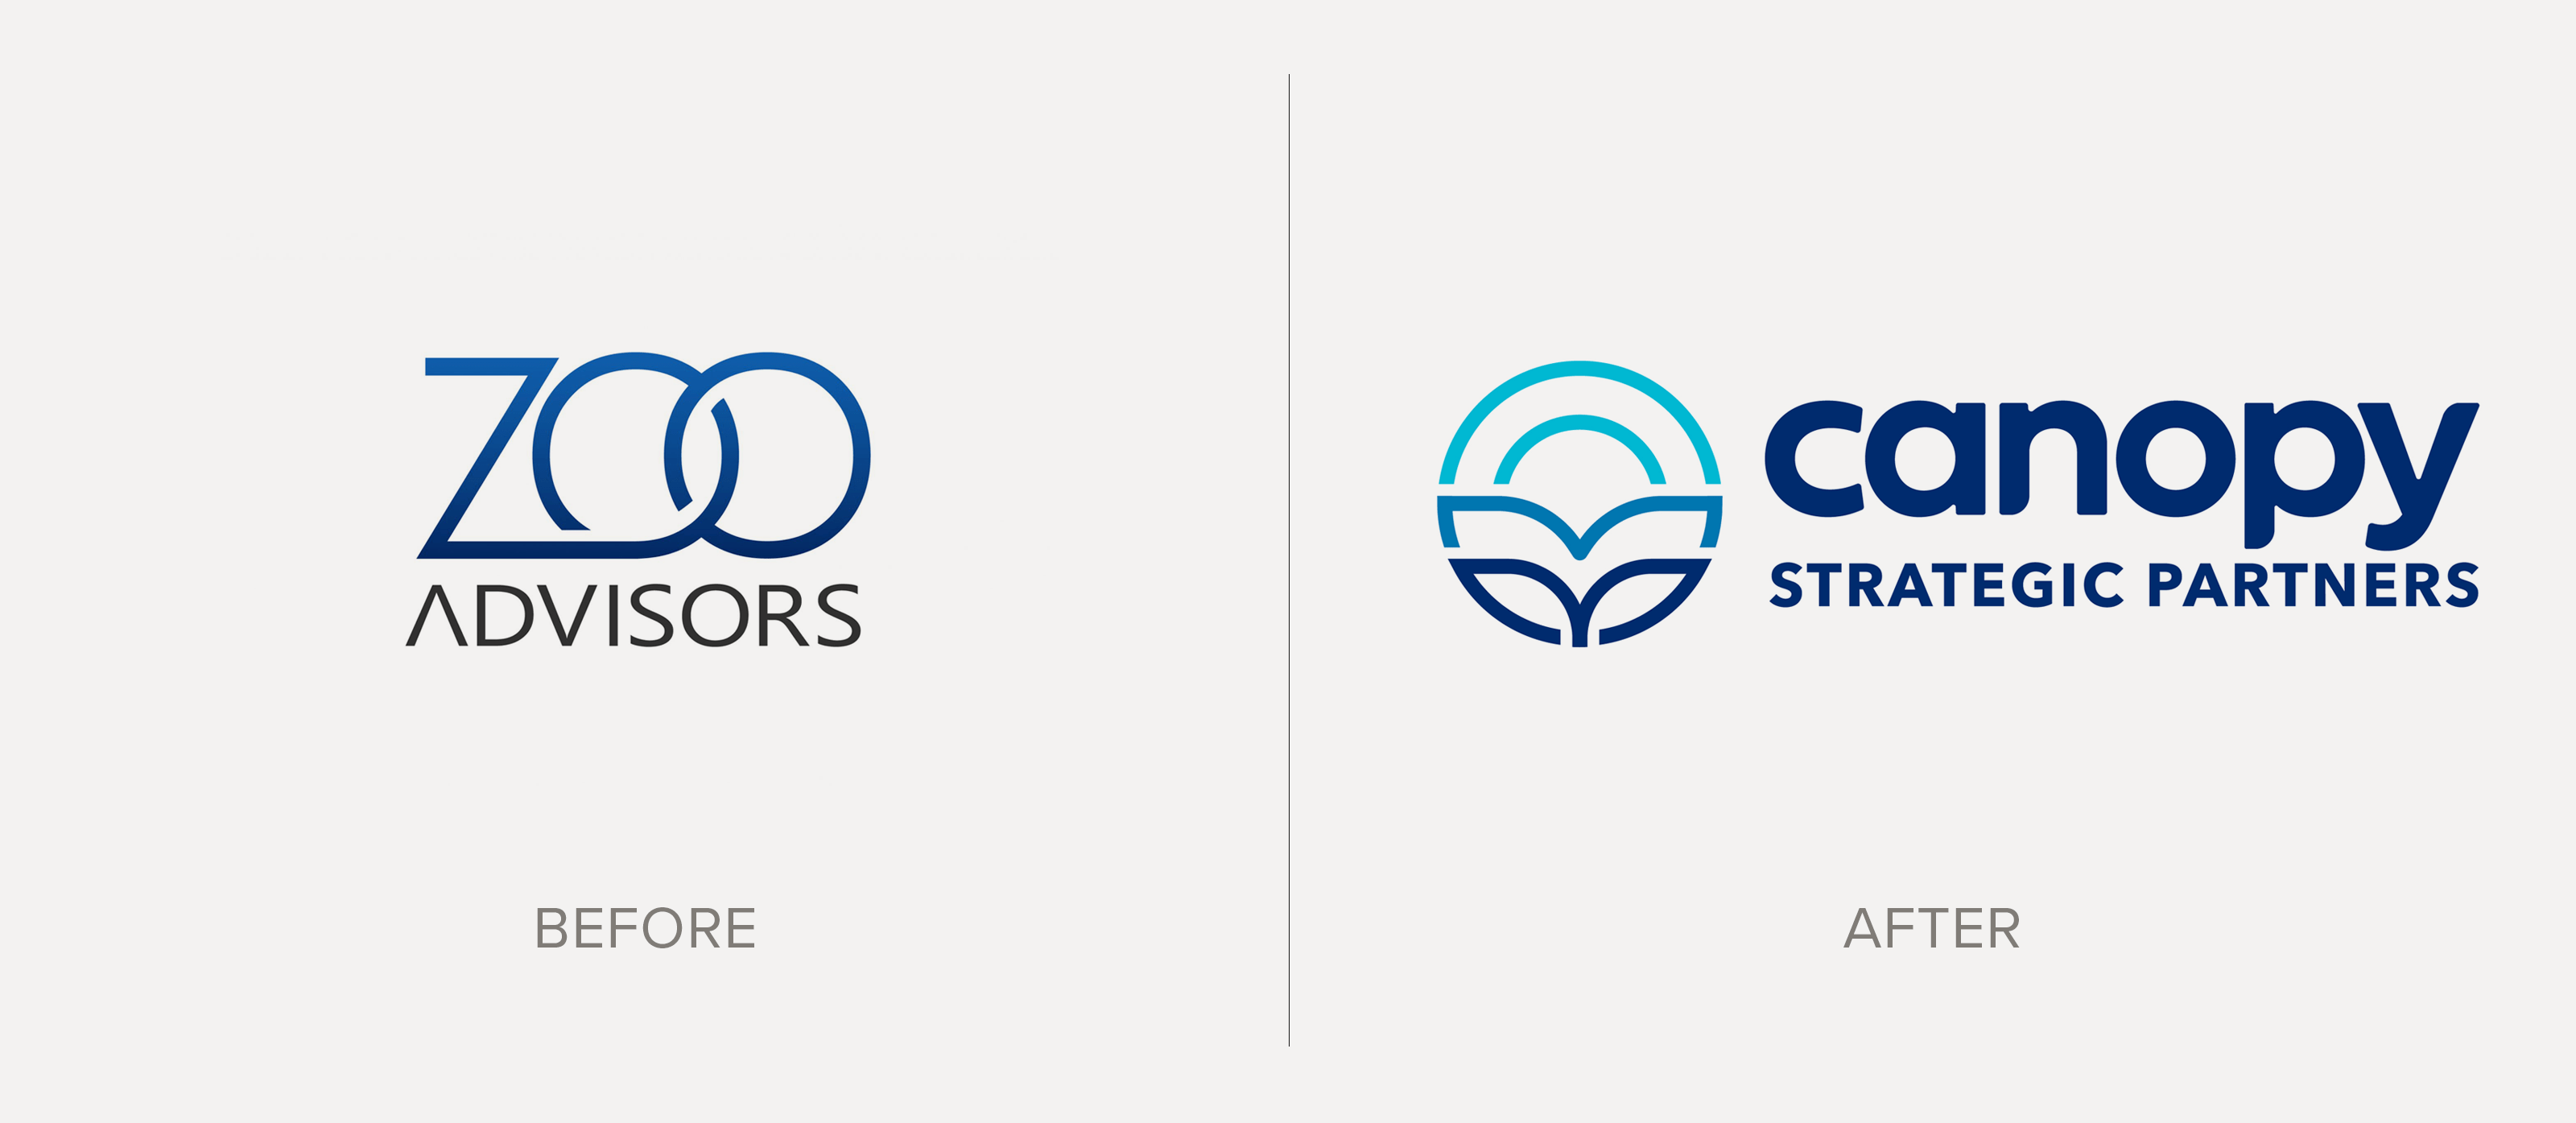 Canopy Strategic Partners Old Logo & New Logo